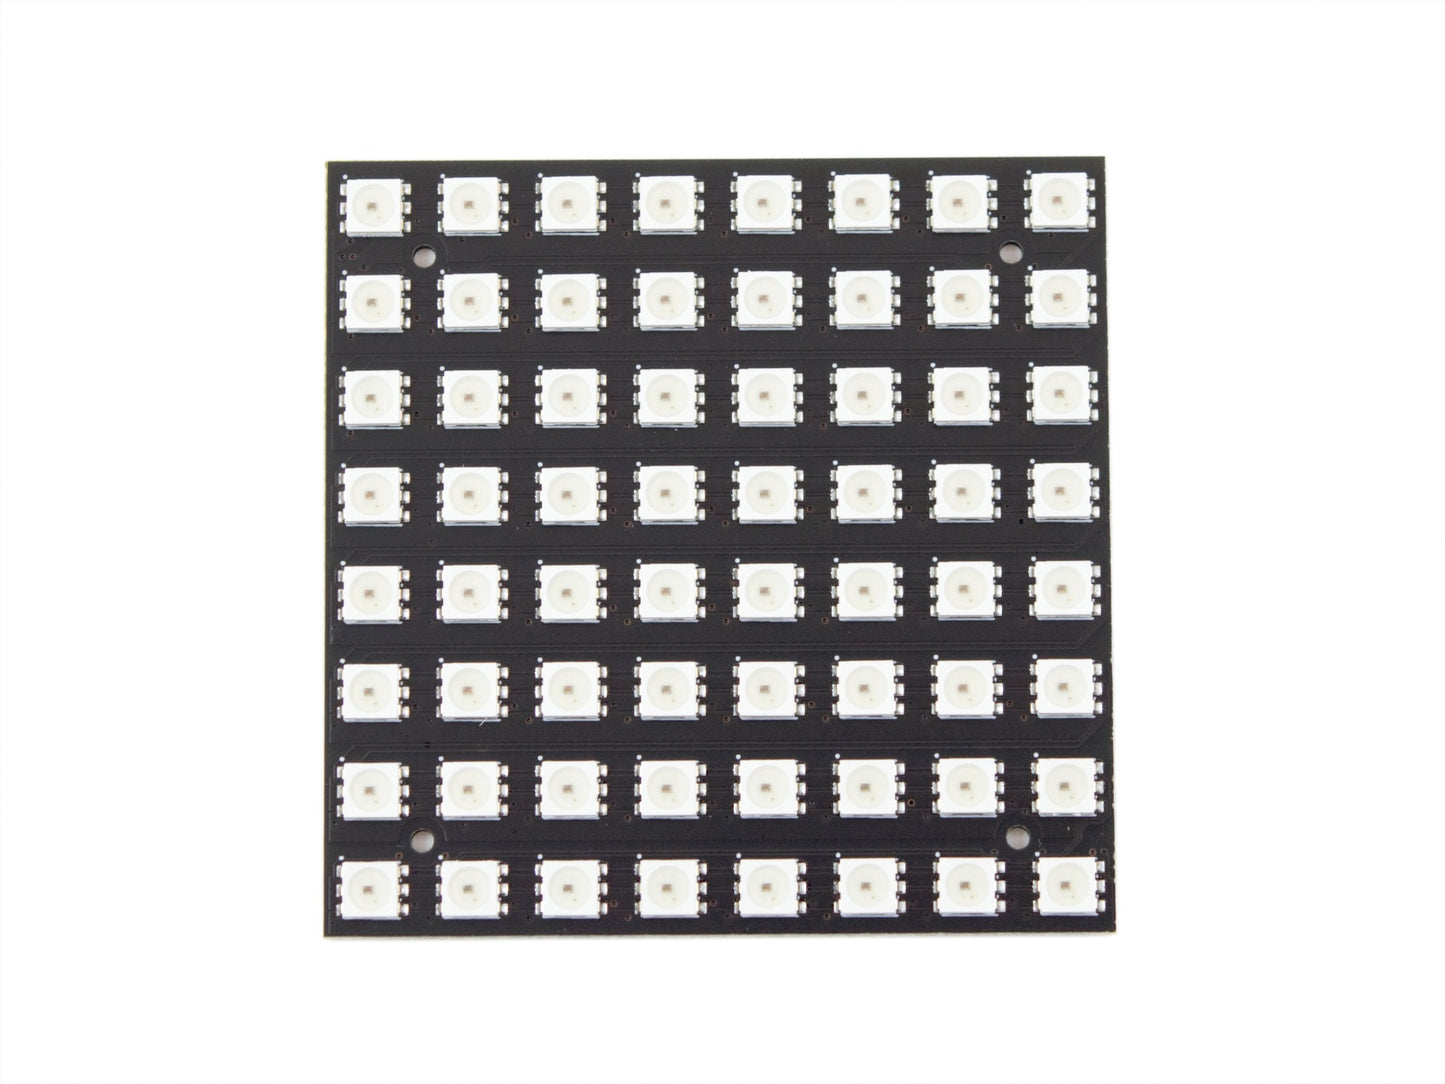 8x8 LED Matrix (SK6812)